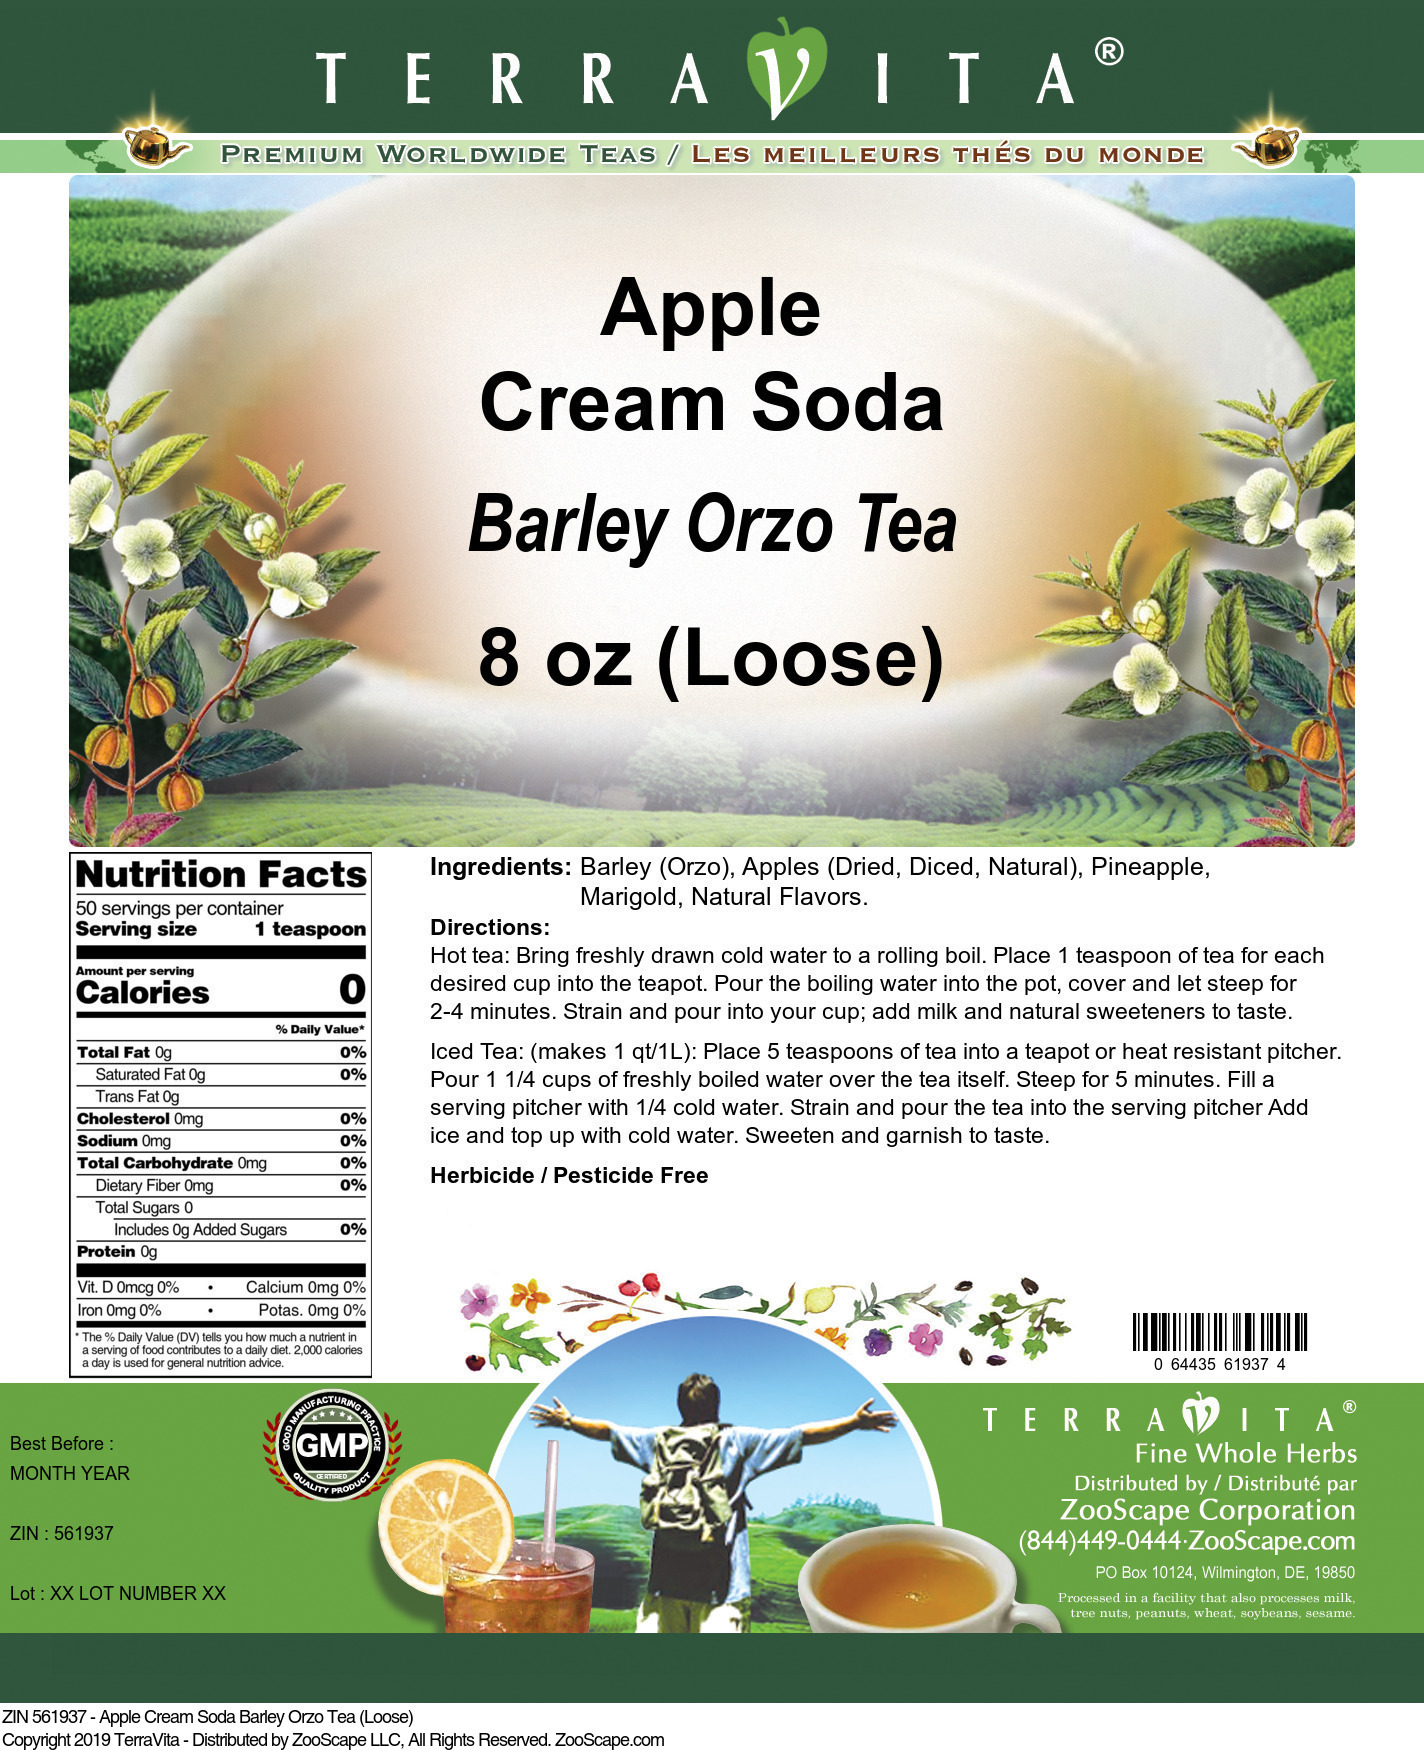 Apple Cream Soda Barley Orzo Tea (Loose) - Label